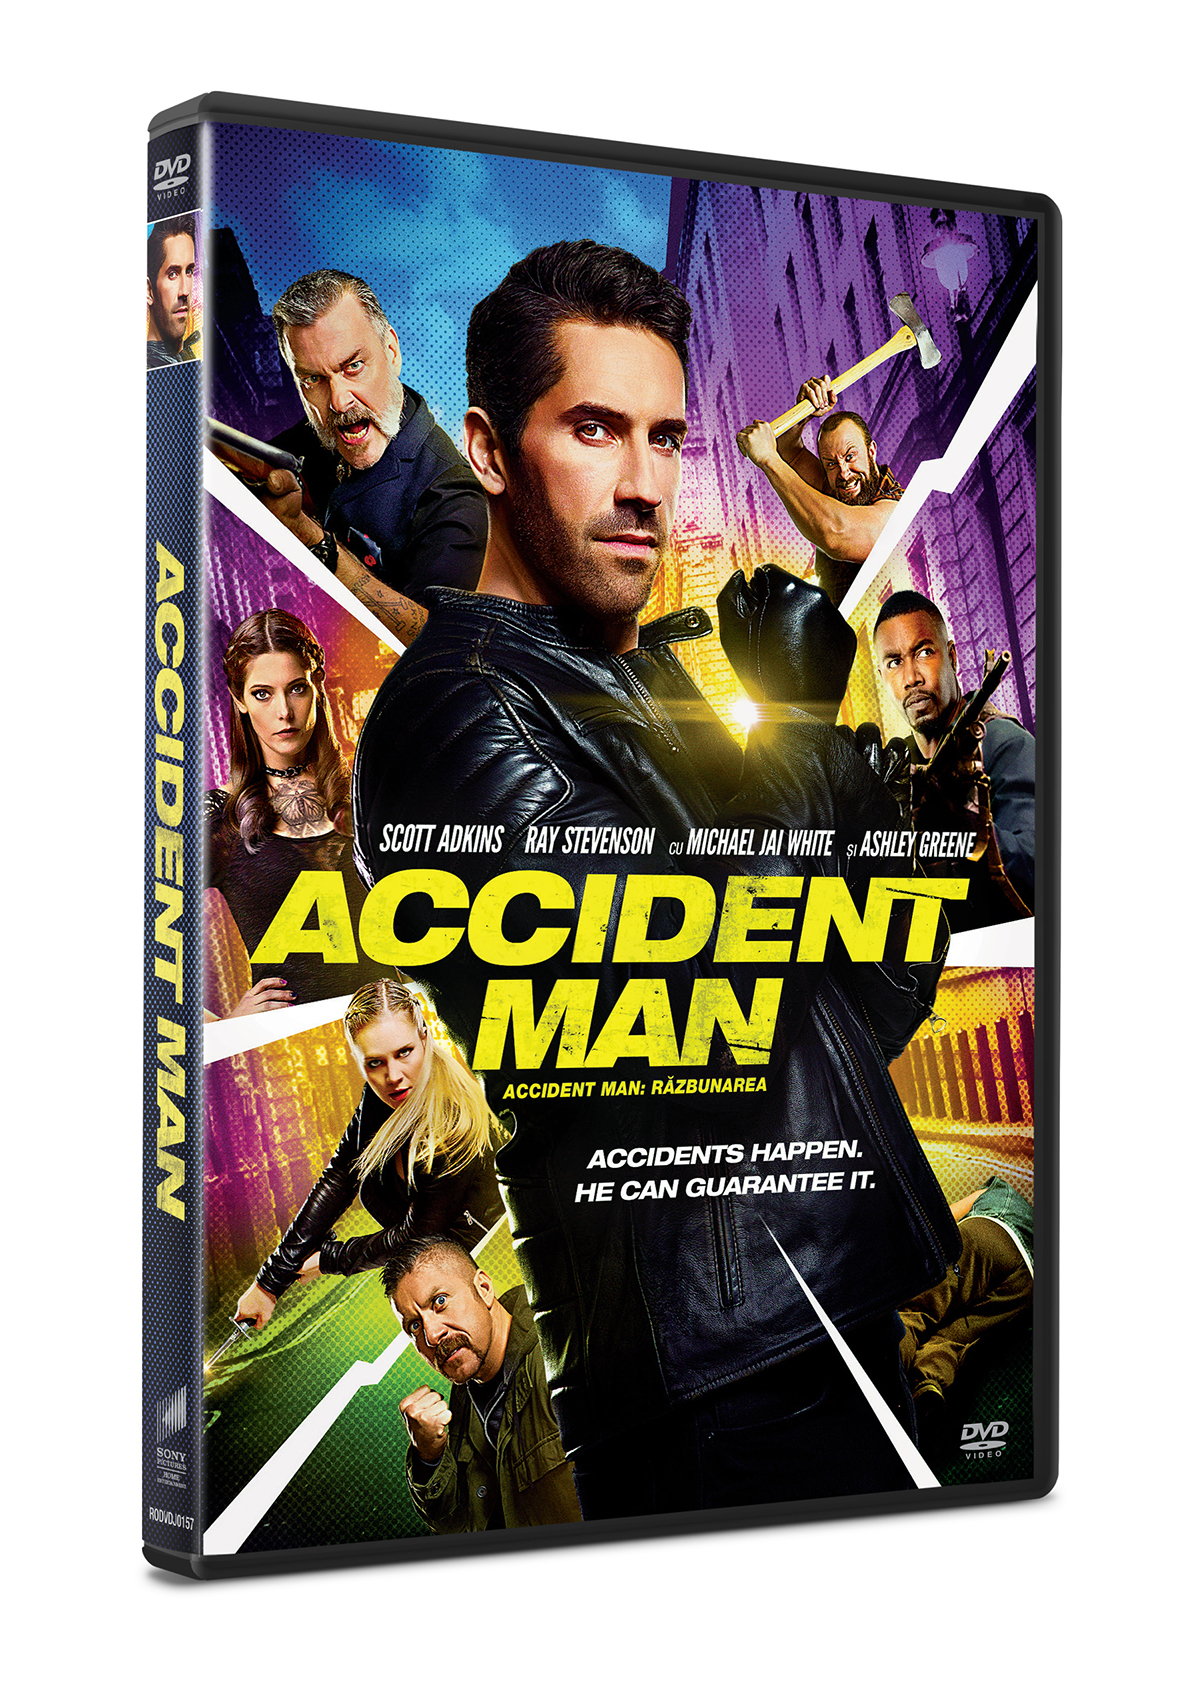 Accident Man: Razbunarea / Accident Man | Jesse V. Johnson image7